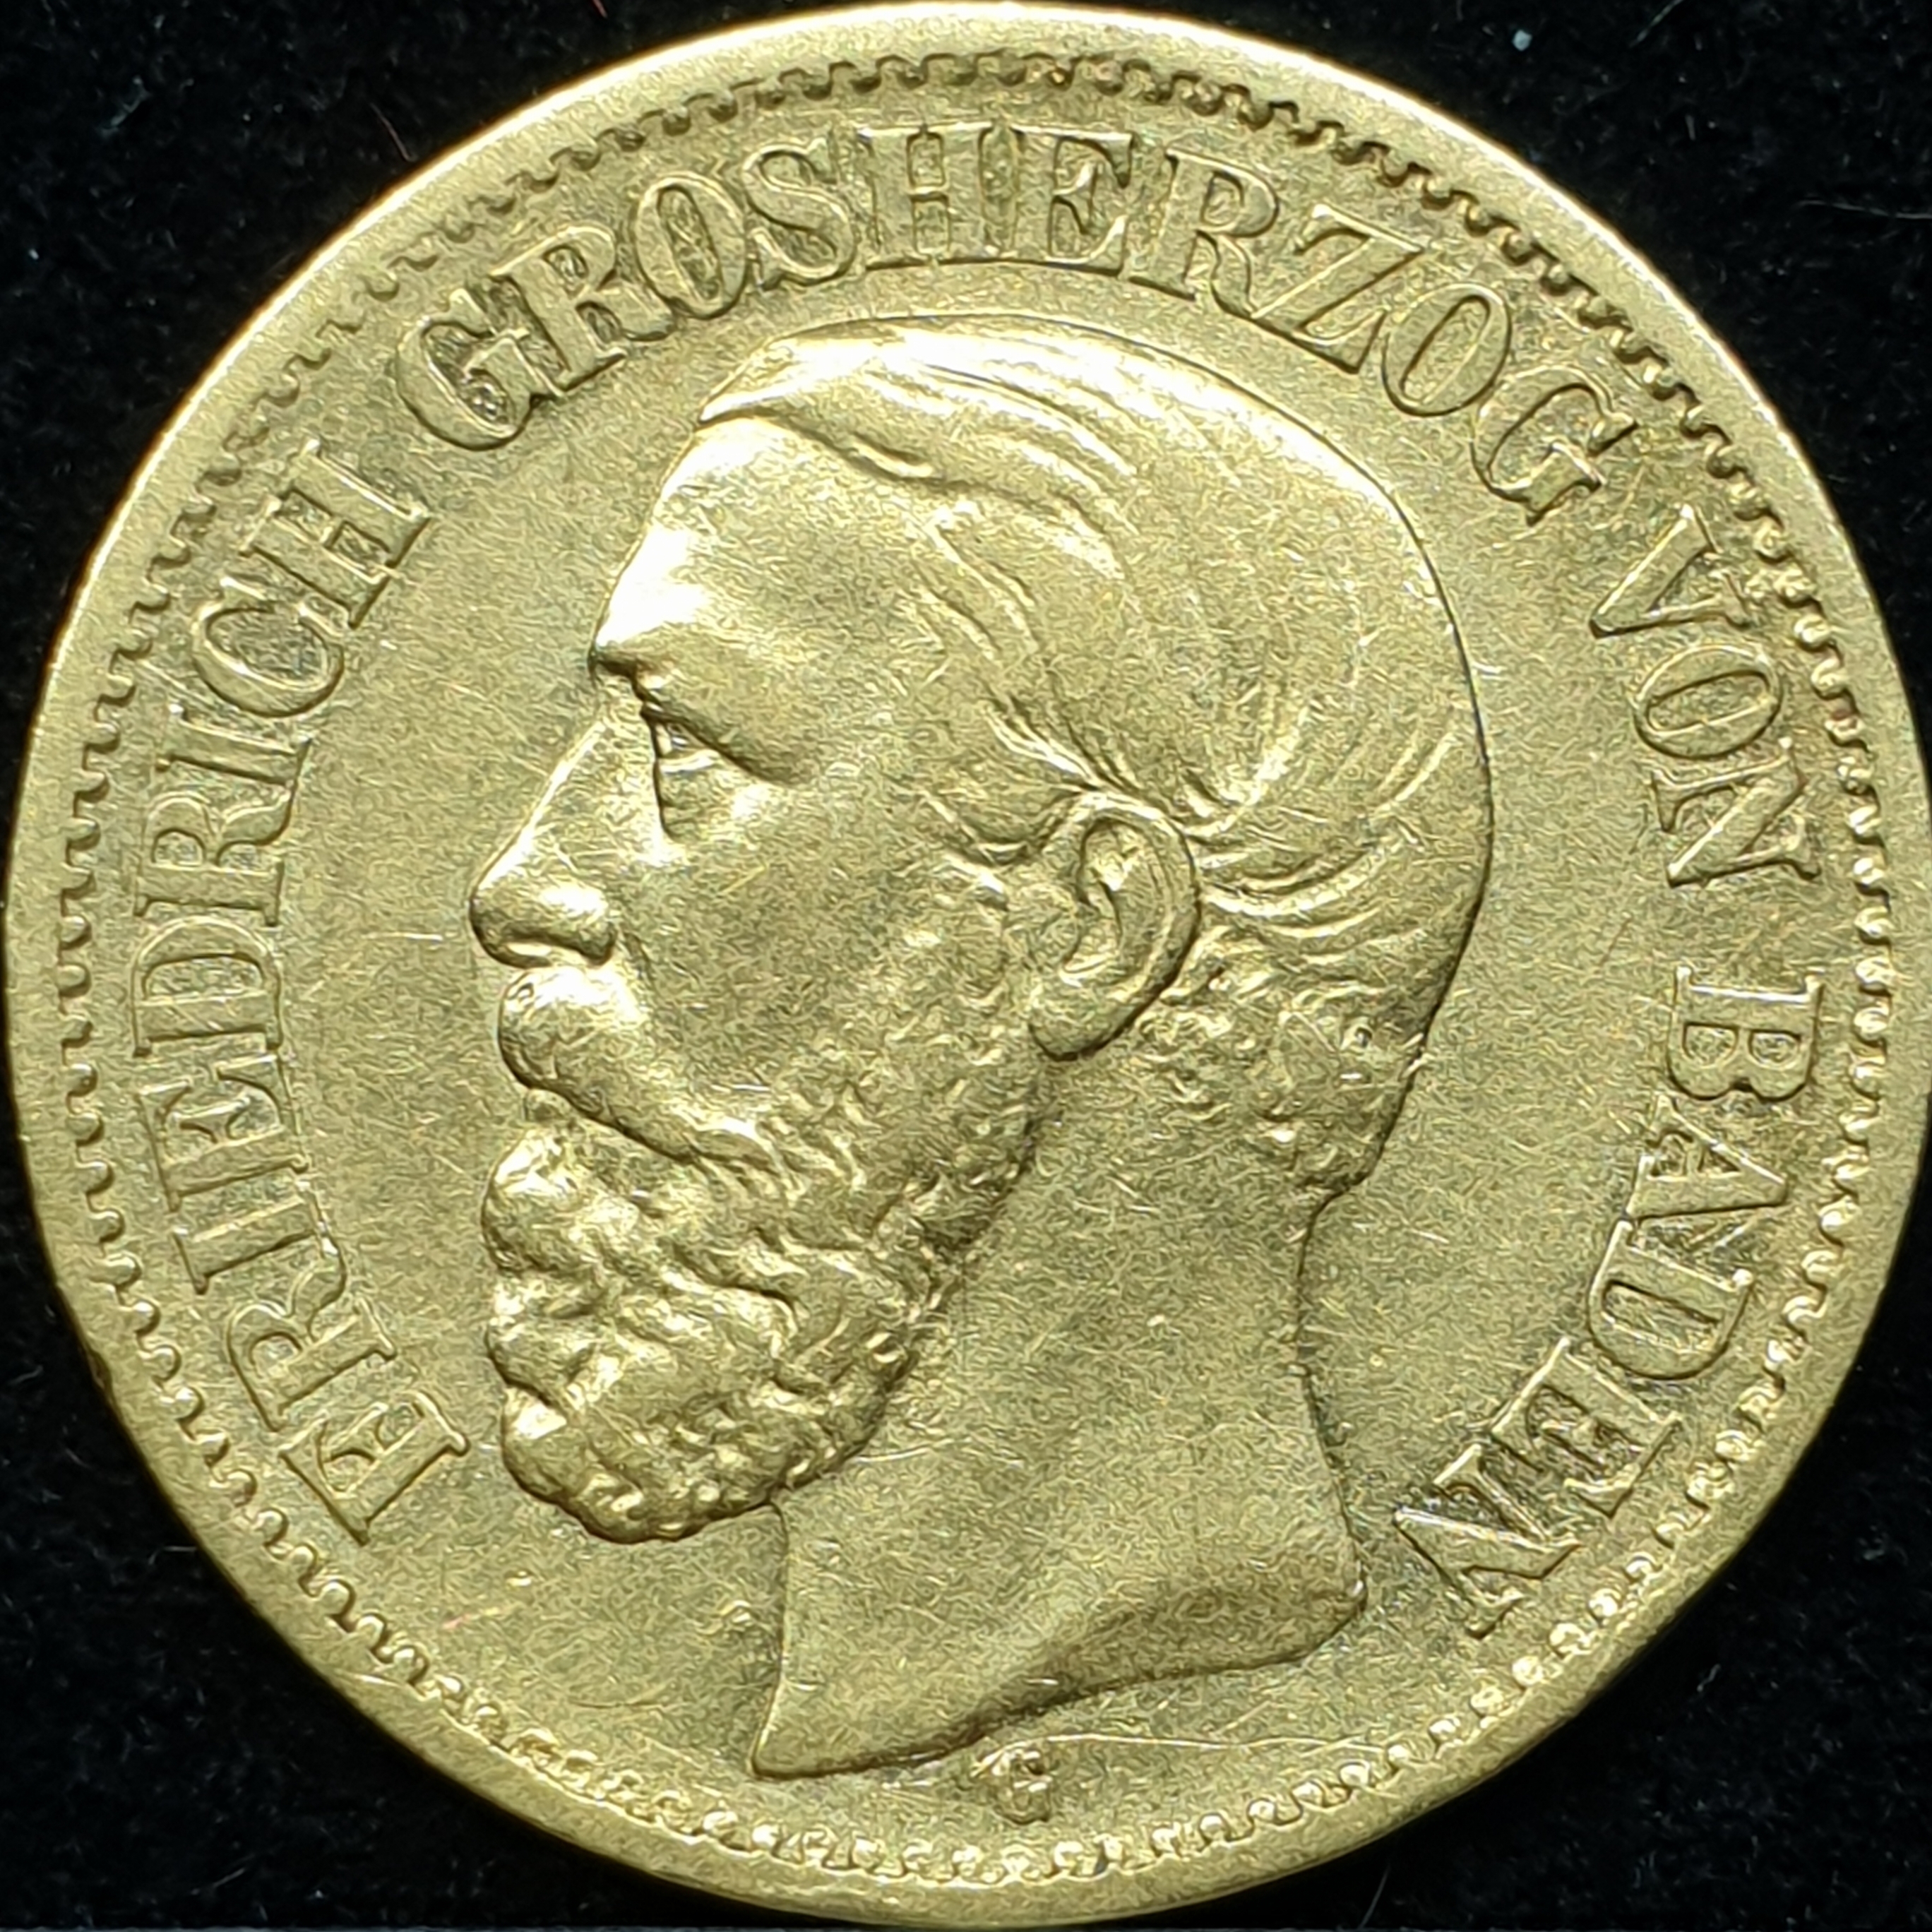 Germany - Baden - 10 mark - 1873 - 'Friedrich I'